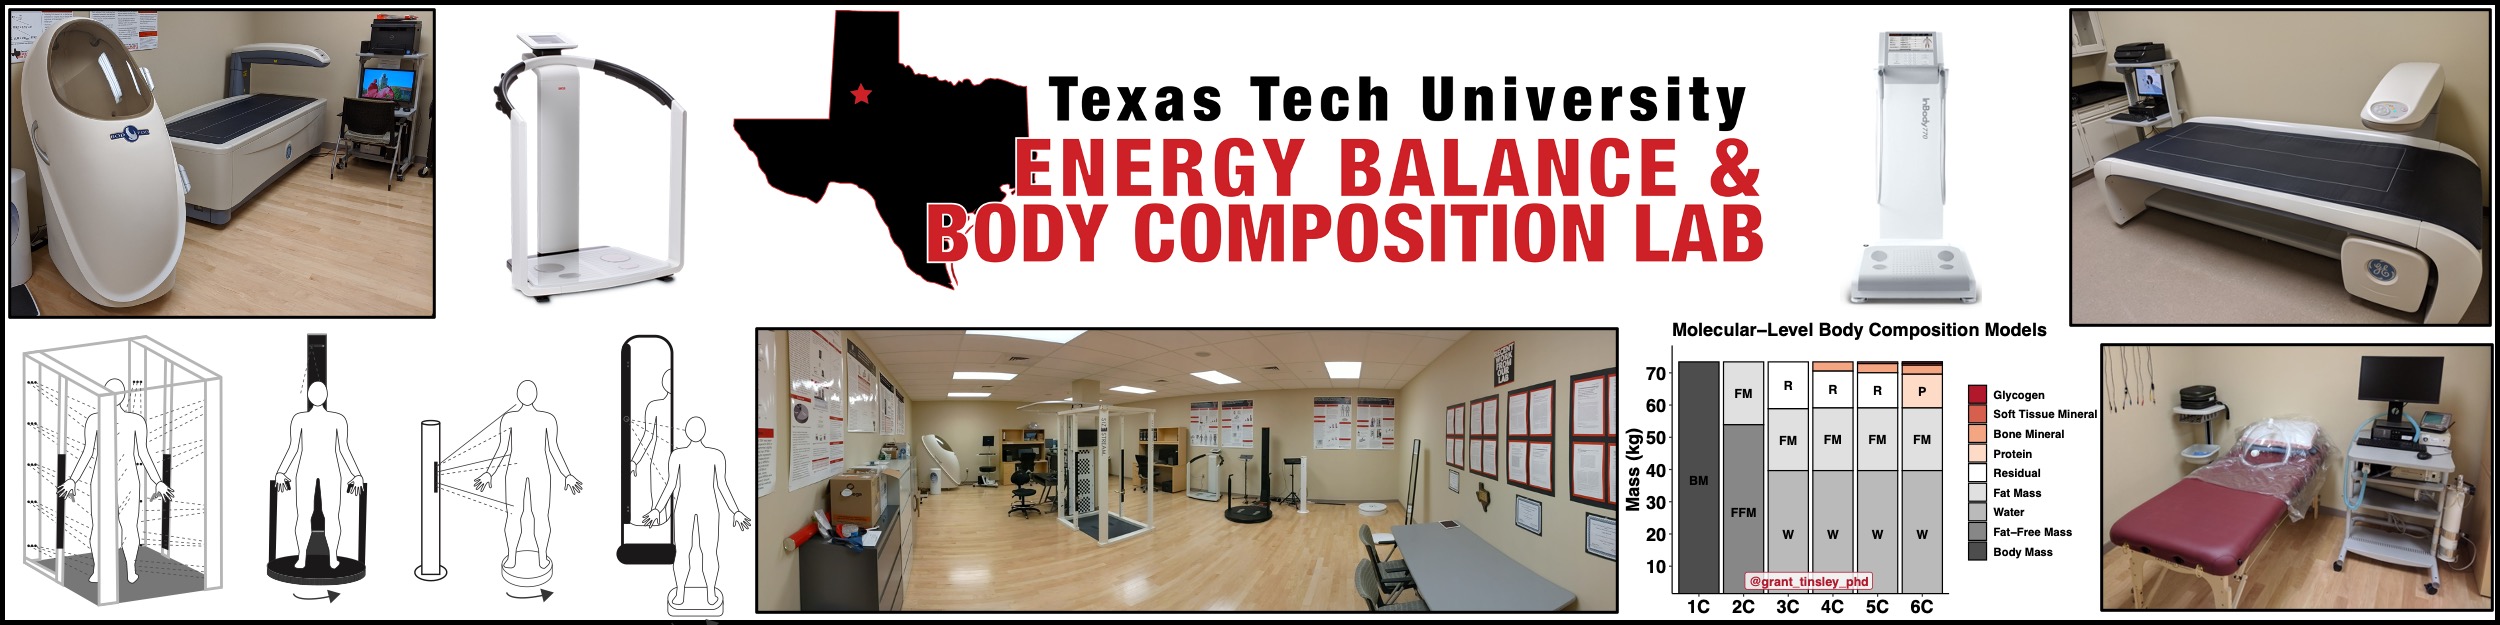 Energy Balance & Body Composition Laboratory